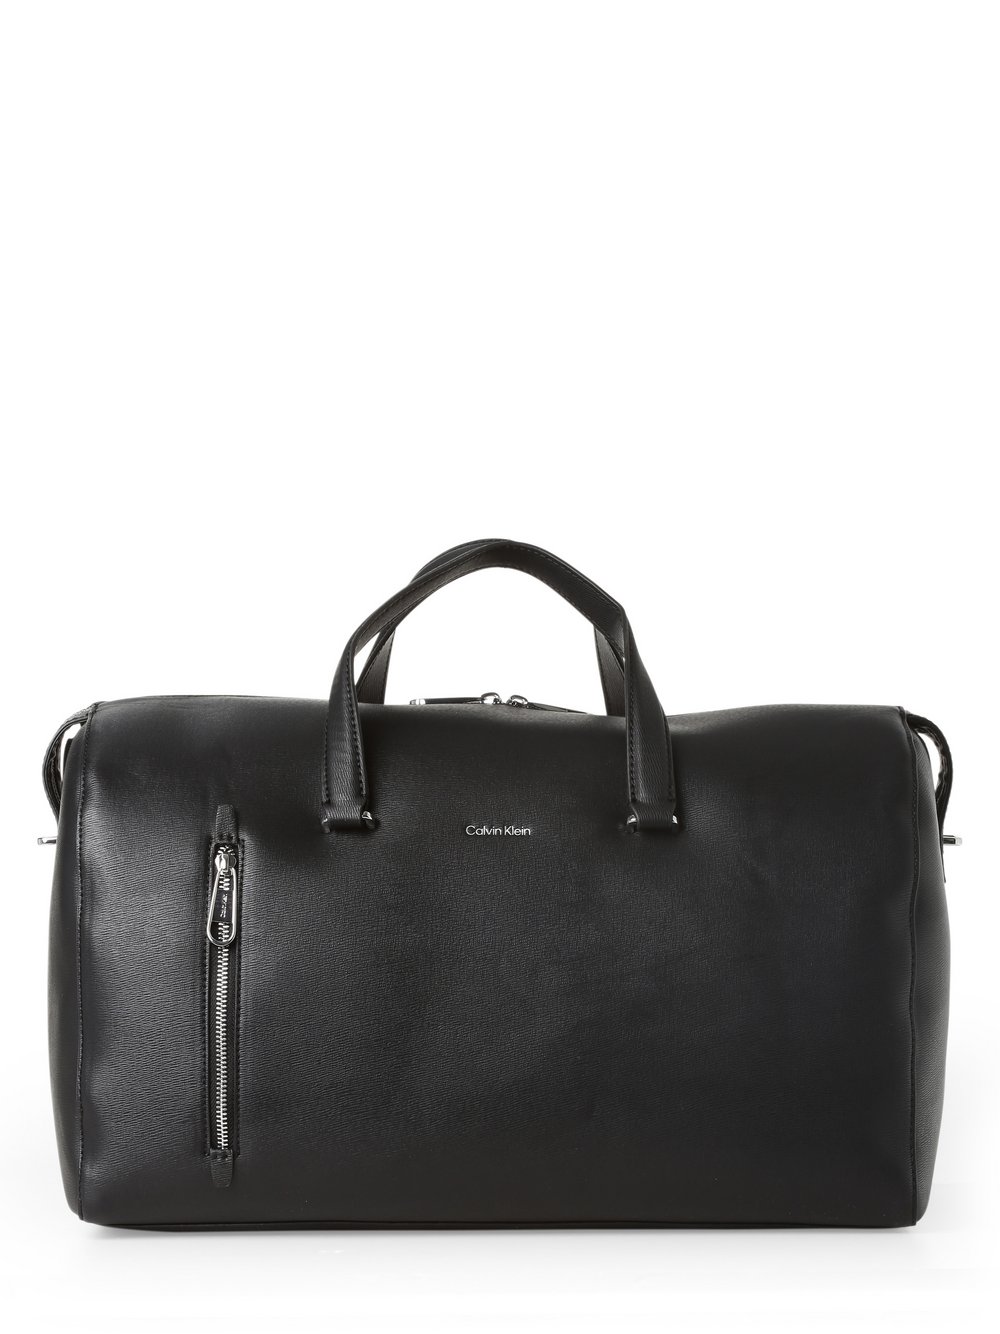 Calvin Klein - Męska torba podróżna, czarny